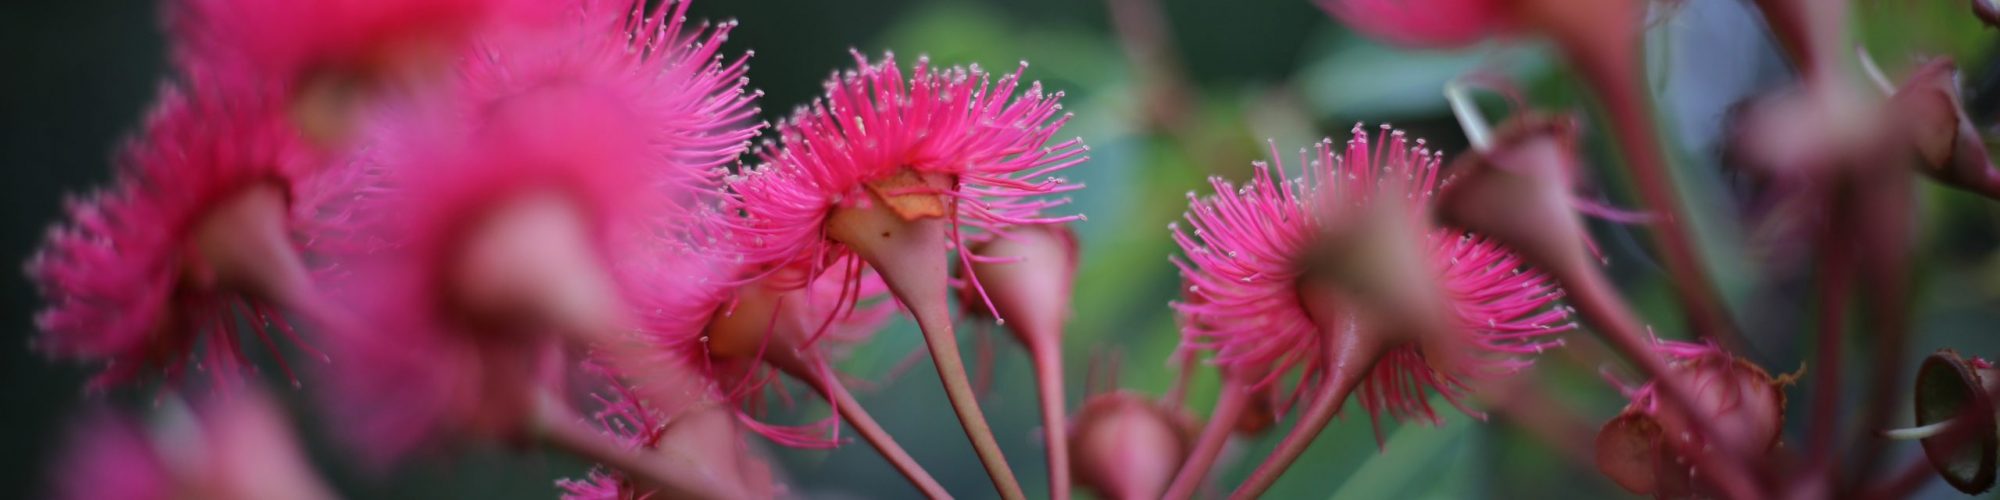 Corymbia ficifolia 'Summer Glory' - Sydney Wildflower Nursery